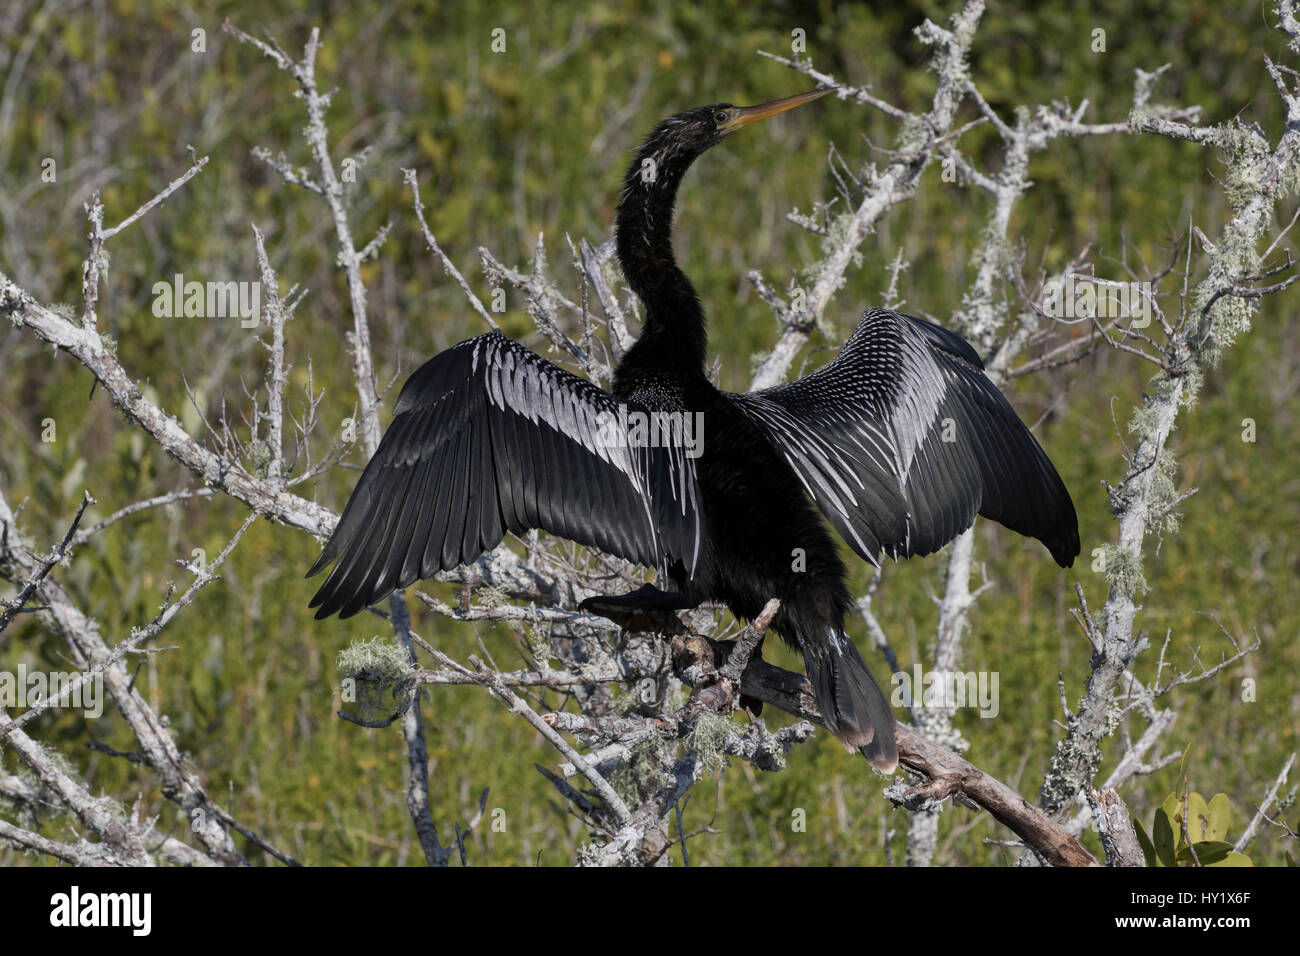 Anhinga (Anhinga anhinga) on dead,  lichen-encrusted branch, drying wings. Merritt Island National Wildlife Refuge, Merritt Island, Florida. Stock Photo